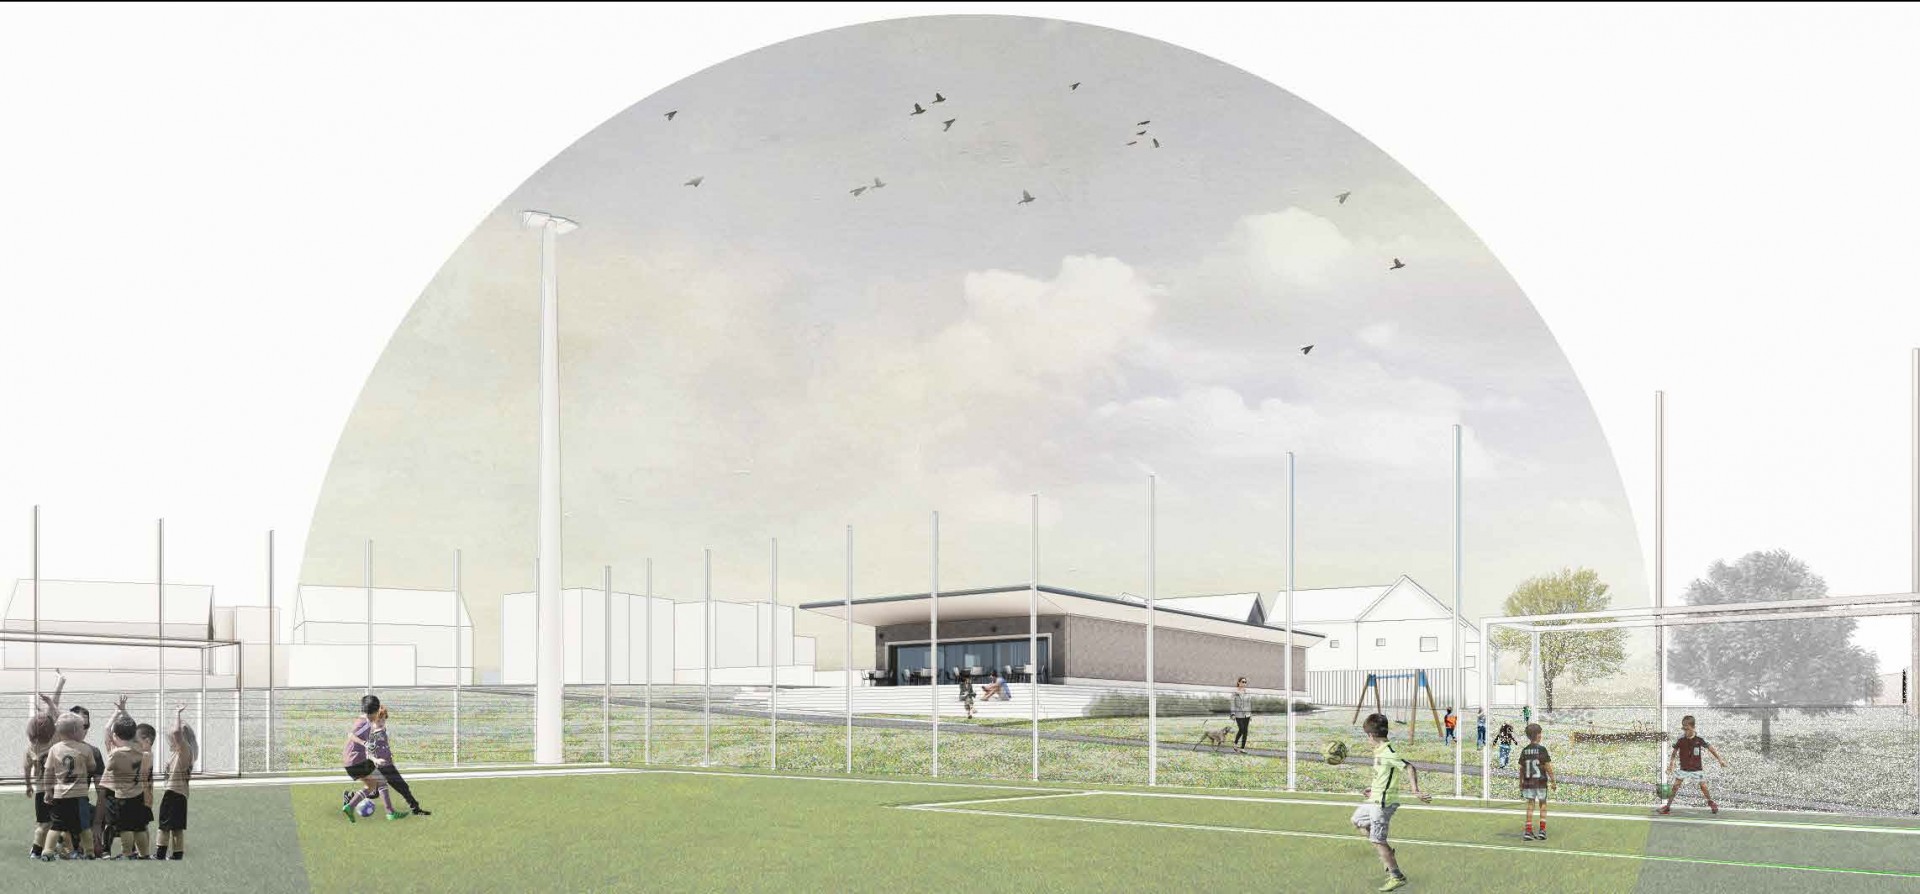 Community scores green light for Glasgow sports pavilion